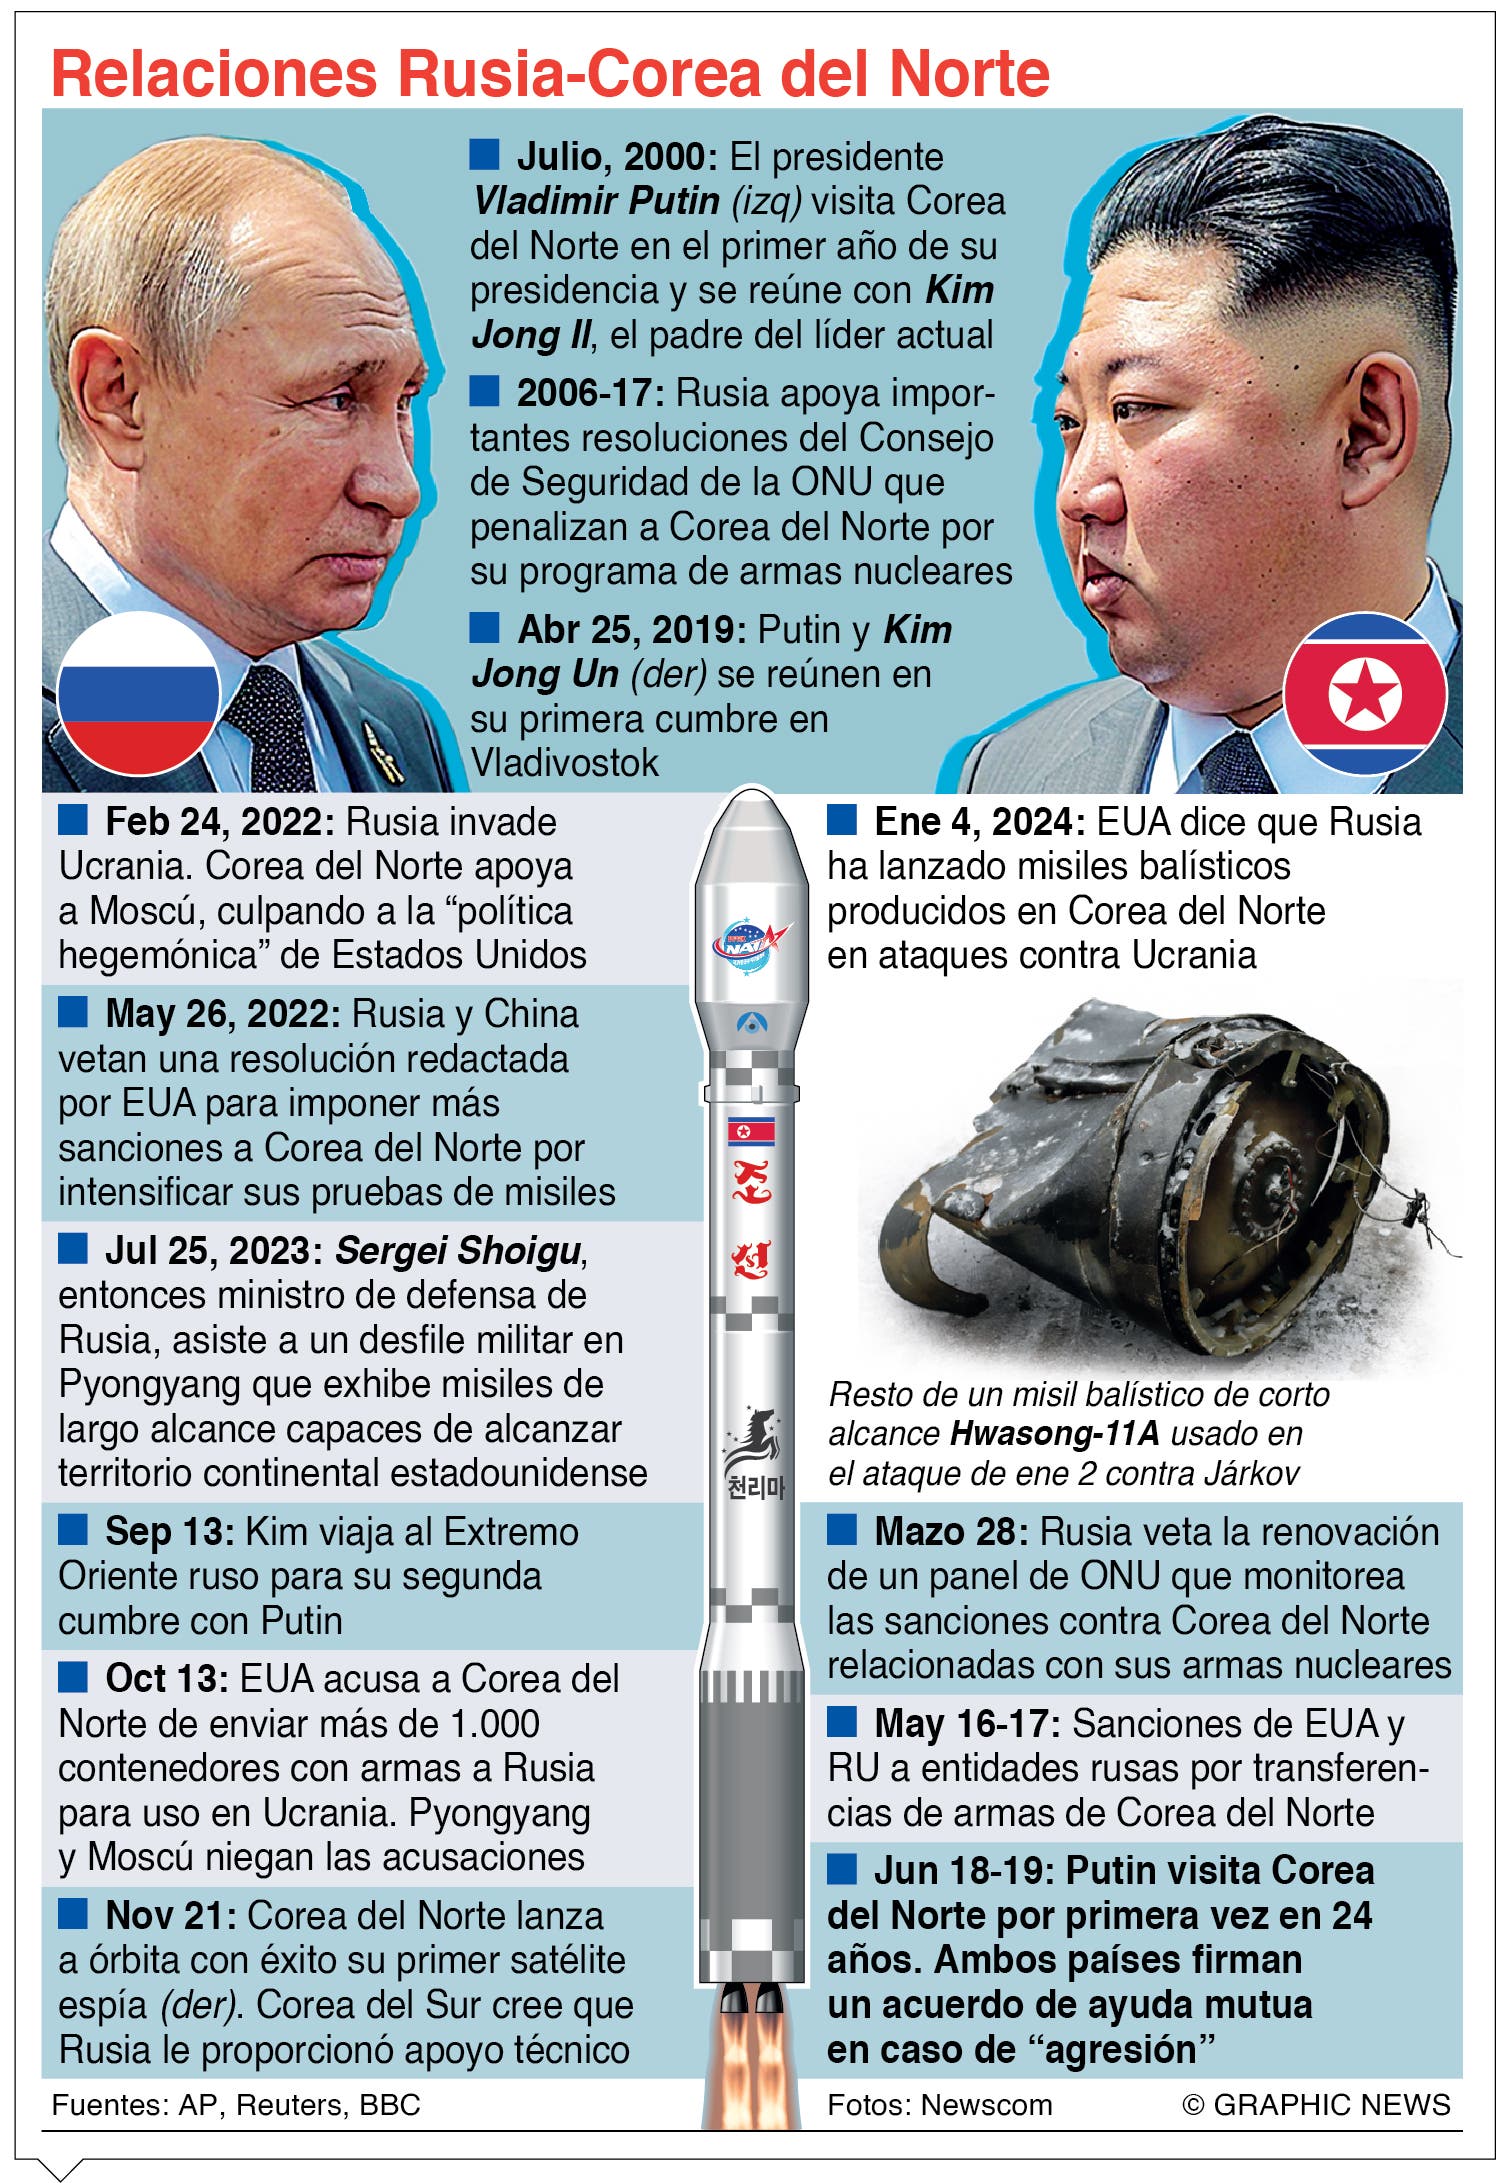 Putin y Kim sellan su alianza con acuerdo asistencia mutua